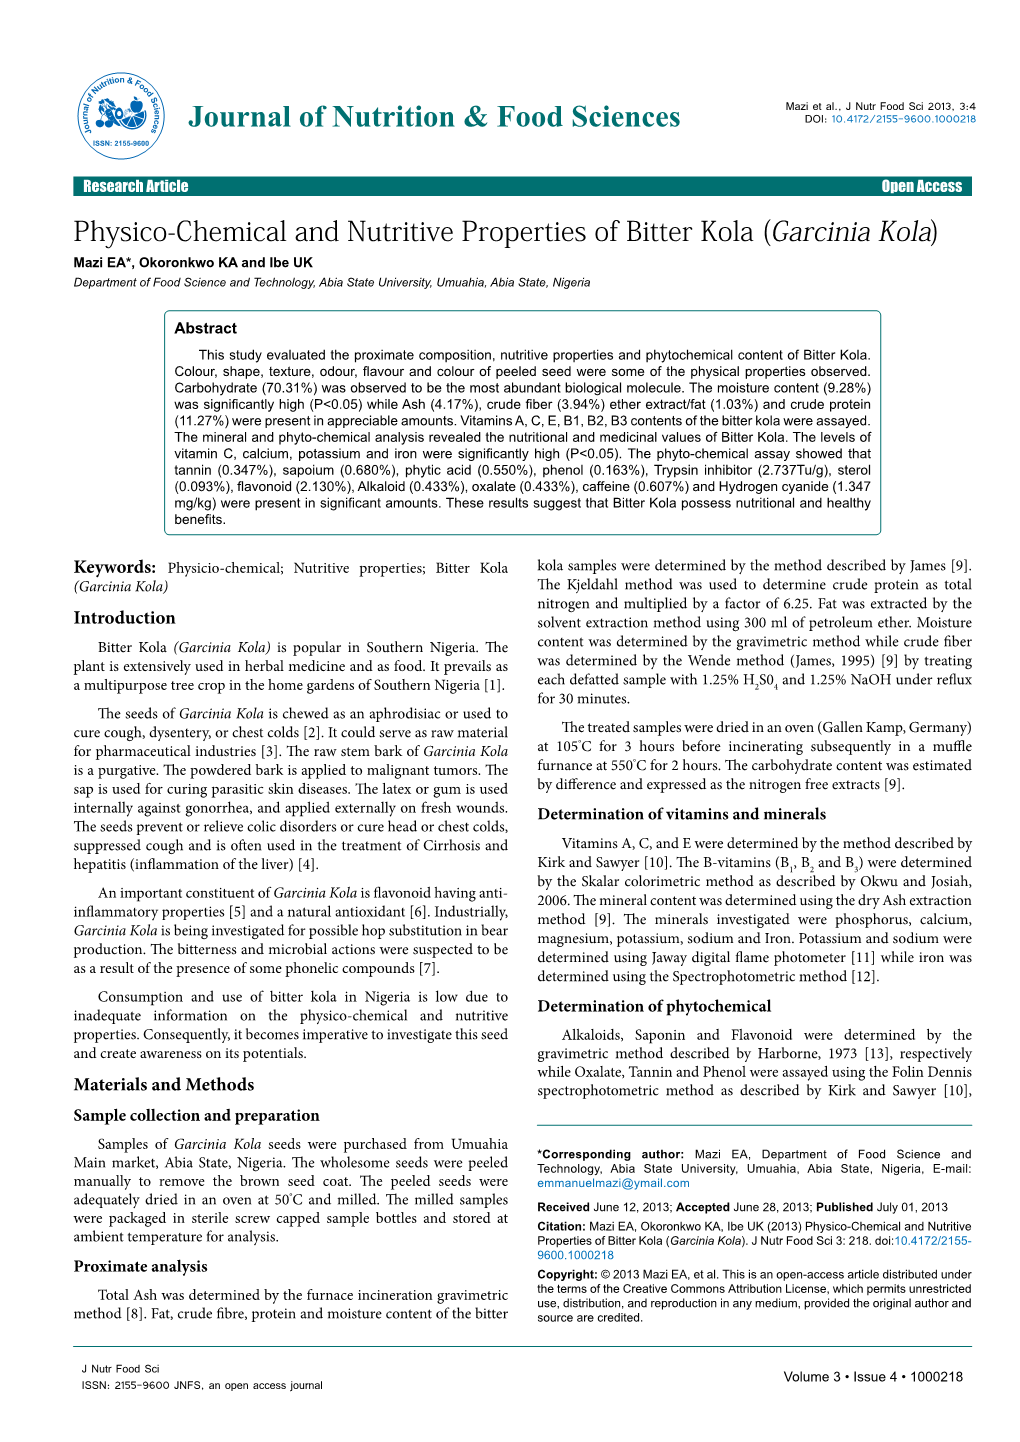 Physico-Chemical and Nutritive Properties of Bitter Kola (Garcinia